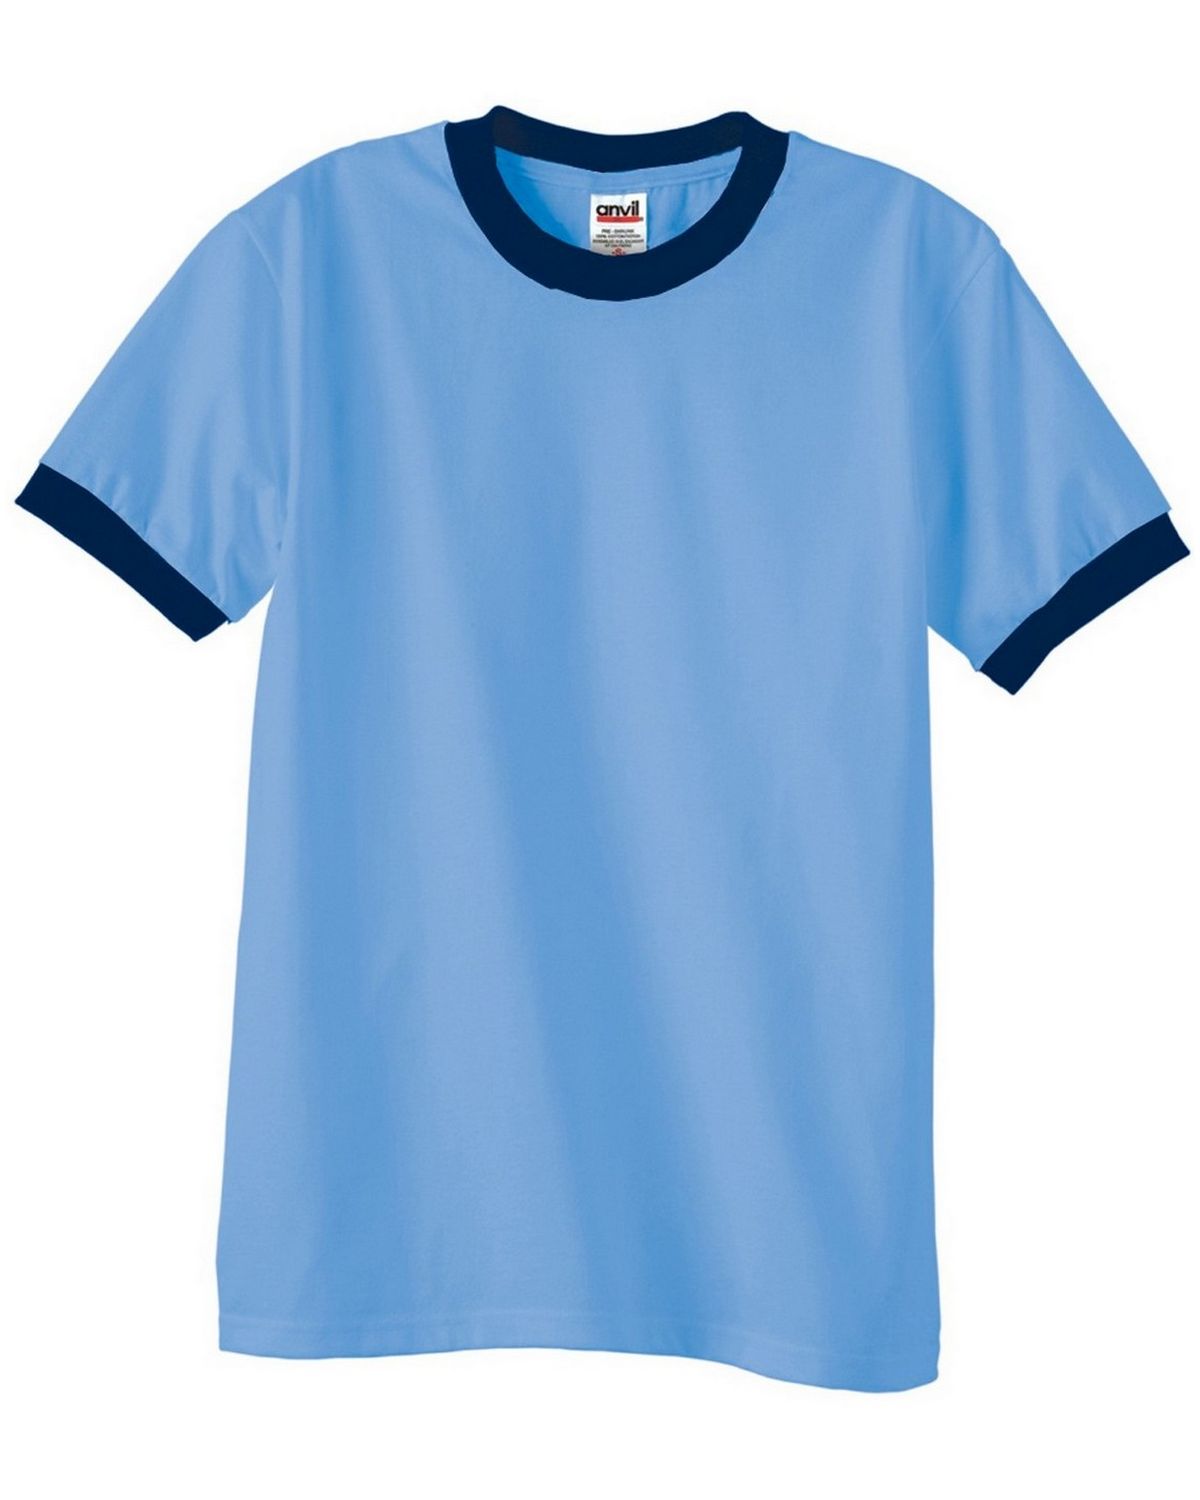 Anvil 923 Men's Cotton Ringer T-Shirt